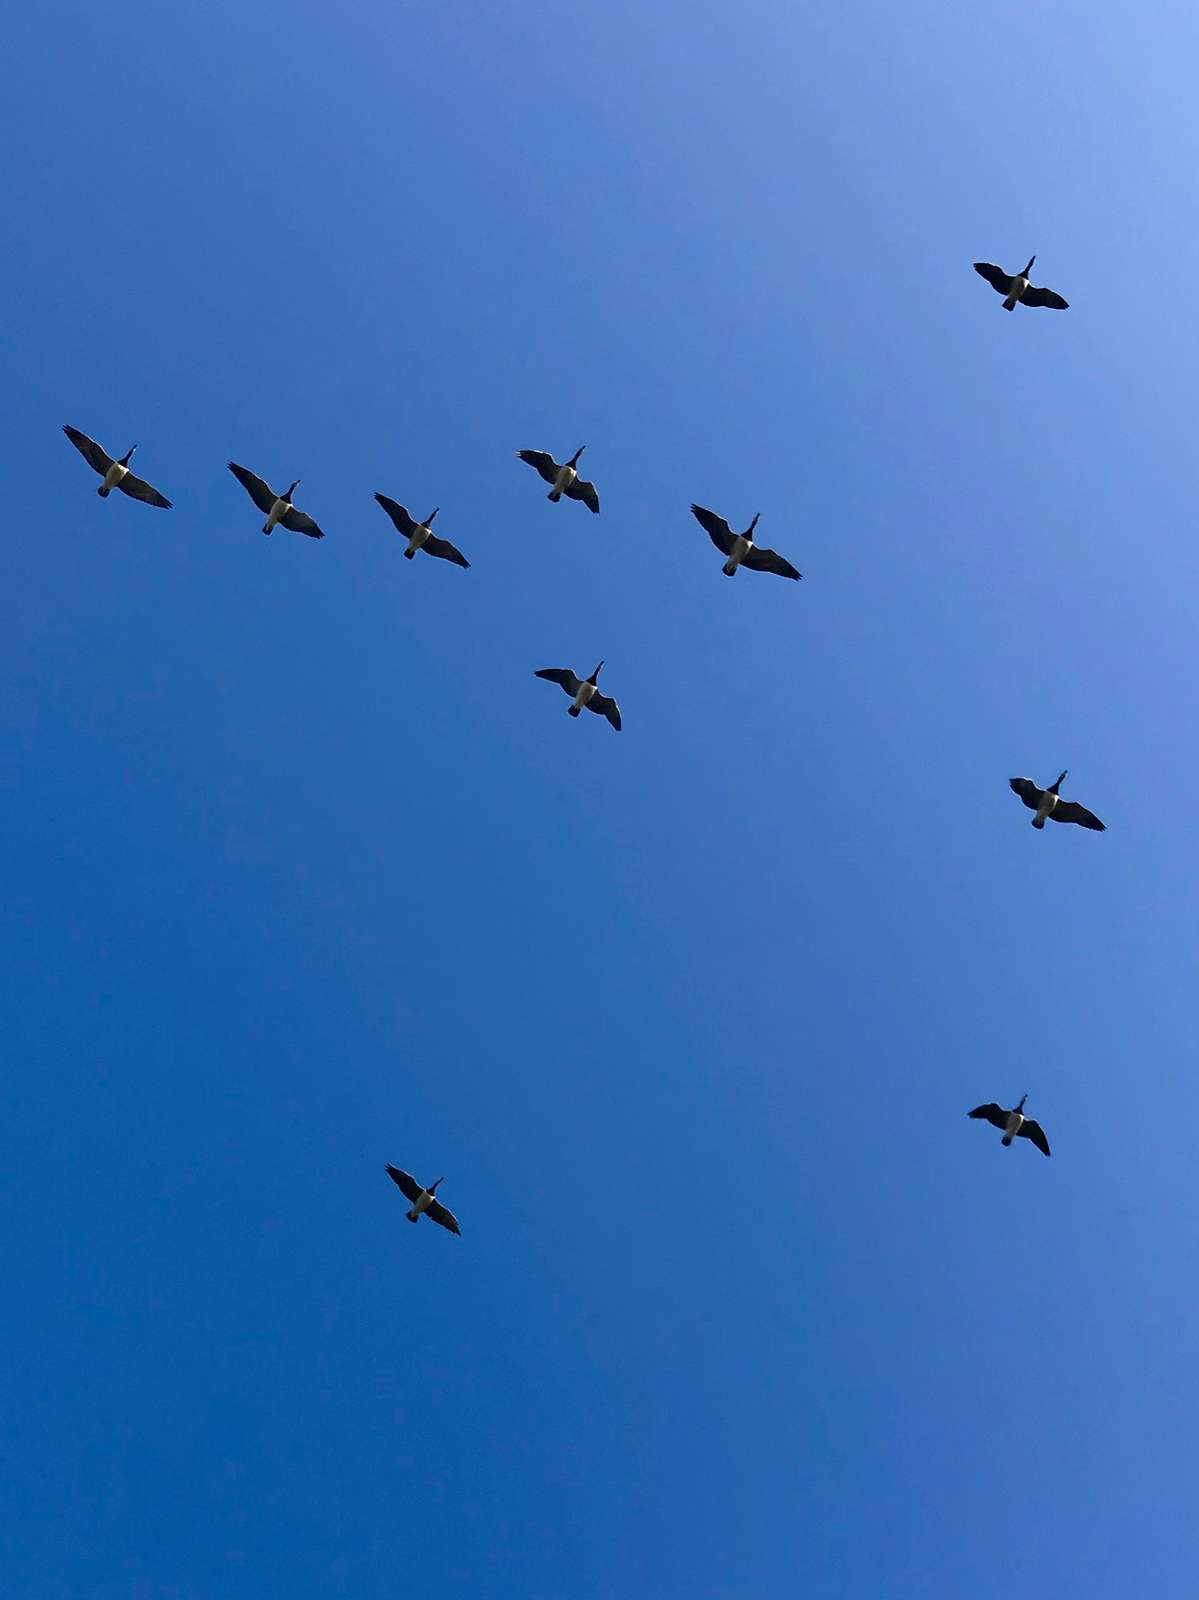 Birds in formation